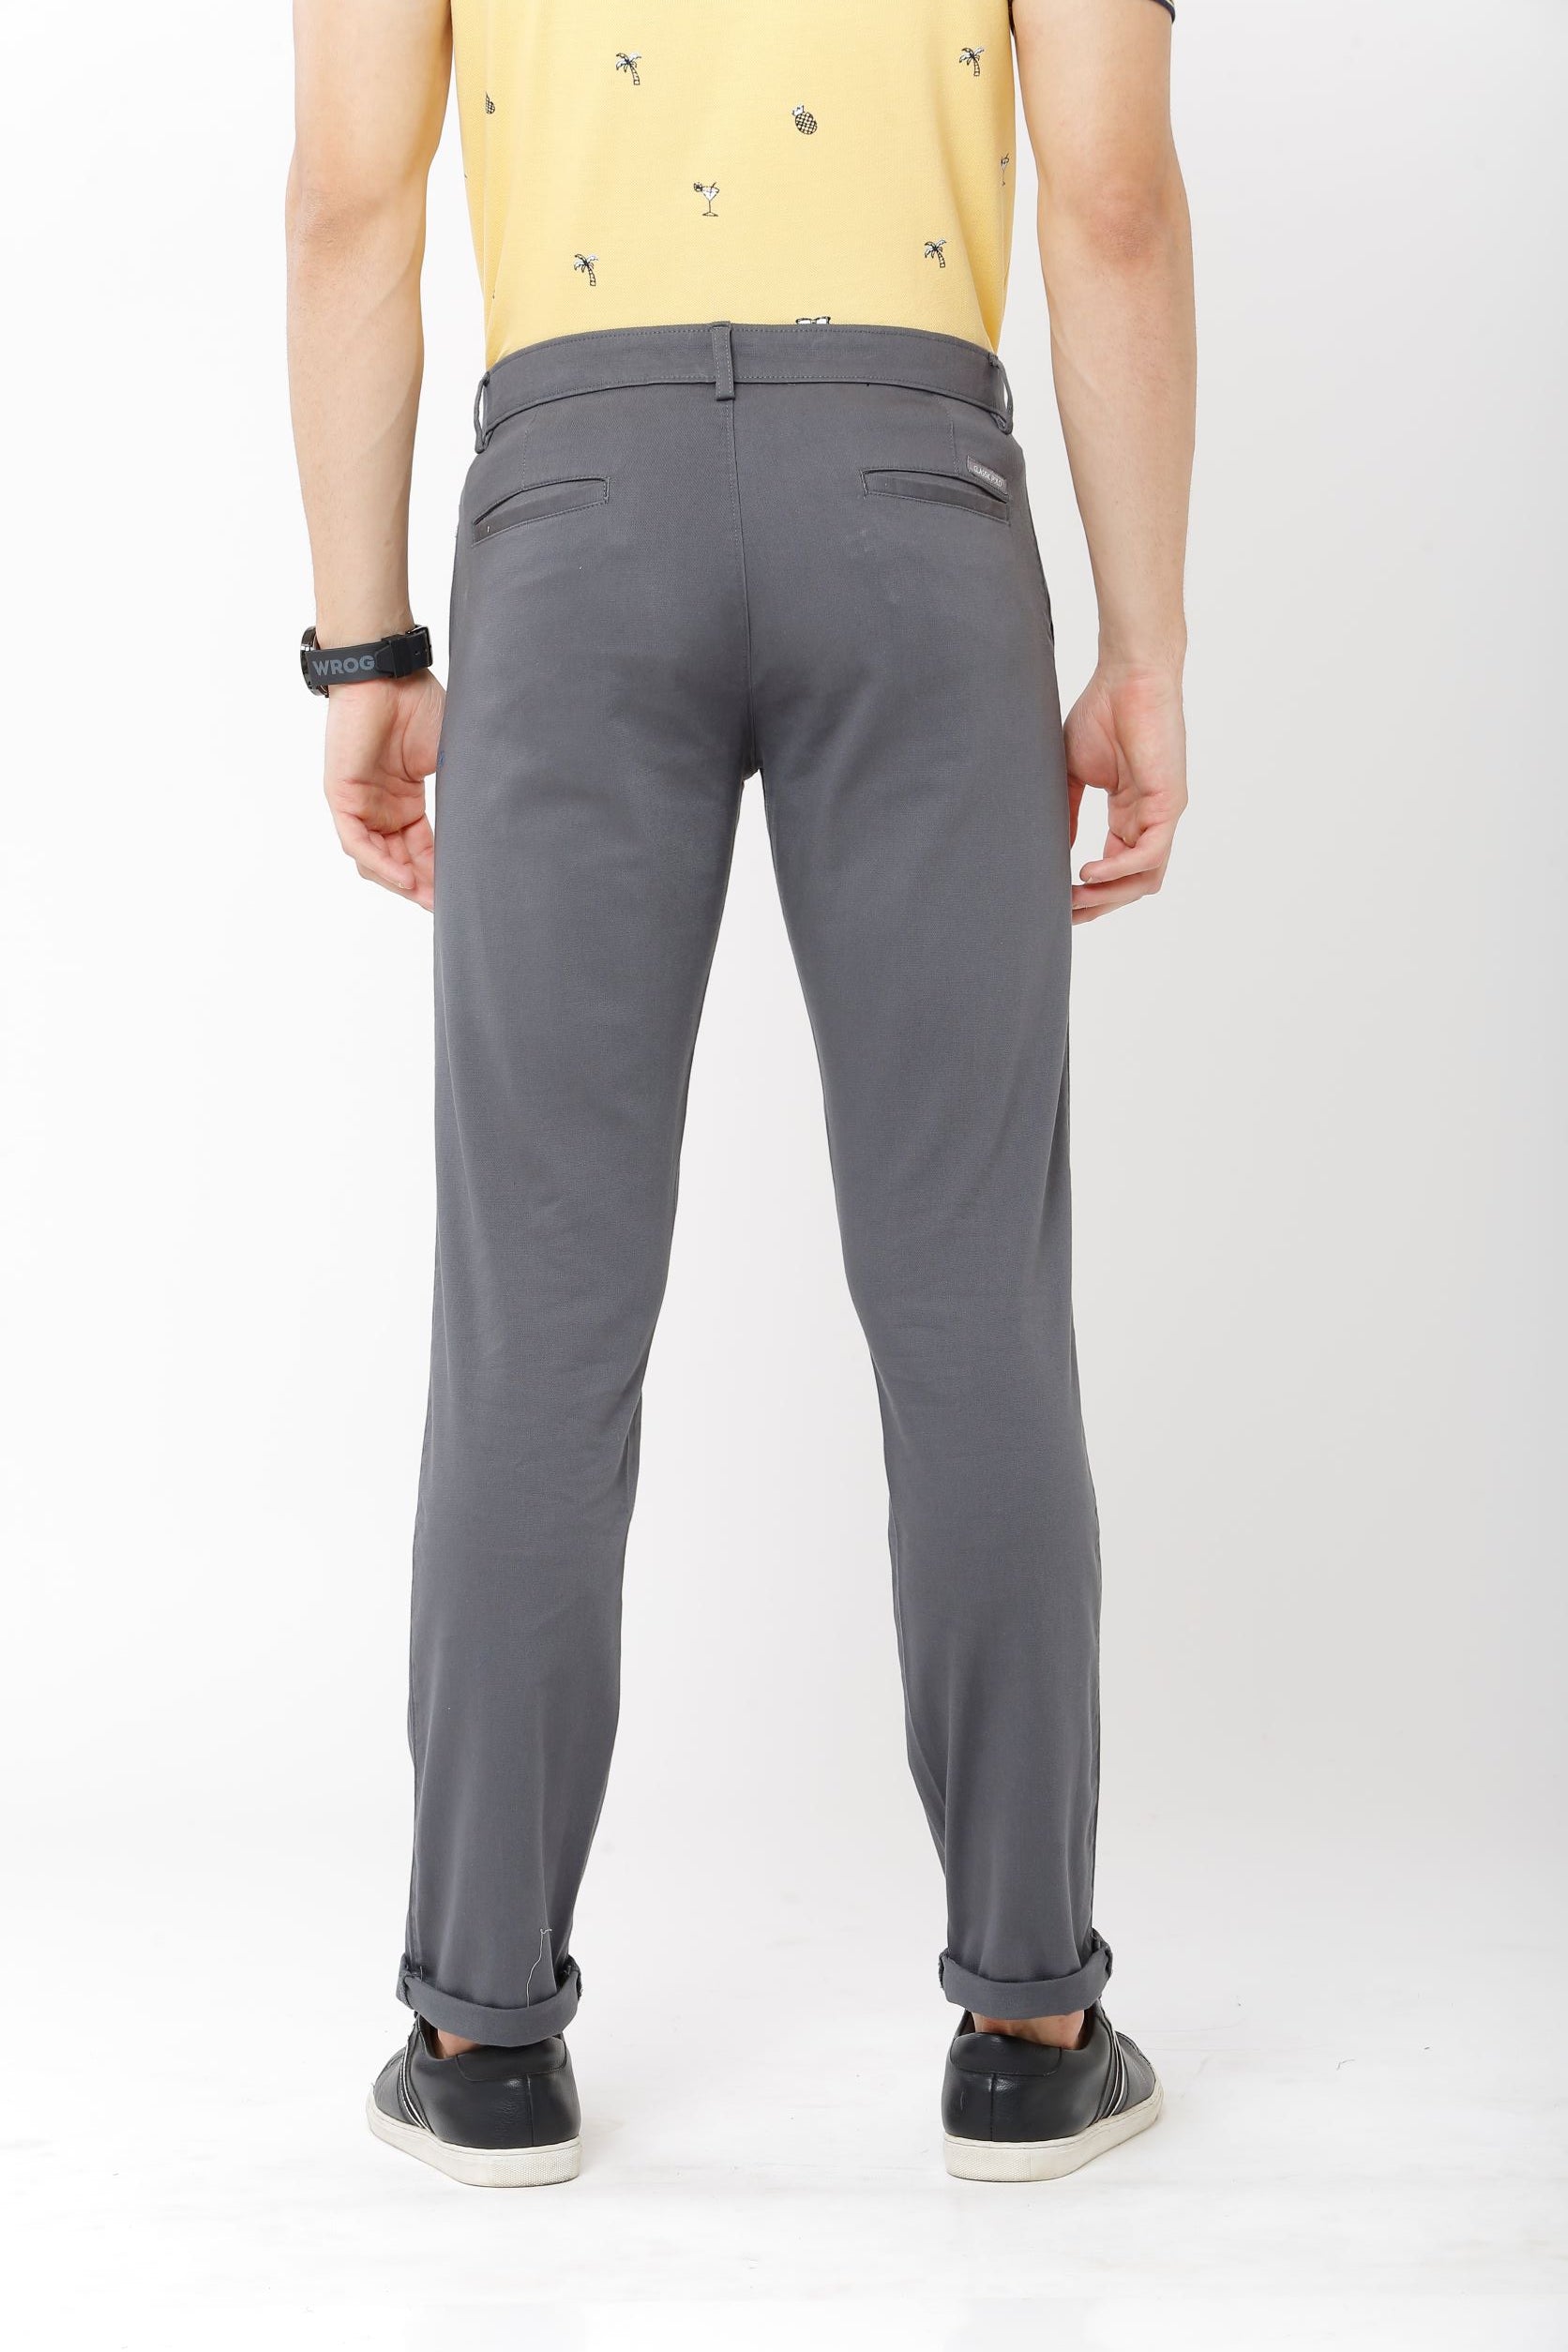 Buy Park Avenue Dark Grey Regular Fit Trousers for Men Online  Tata CLiQ